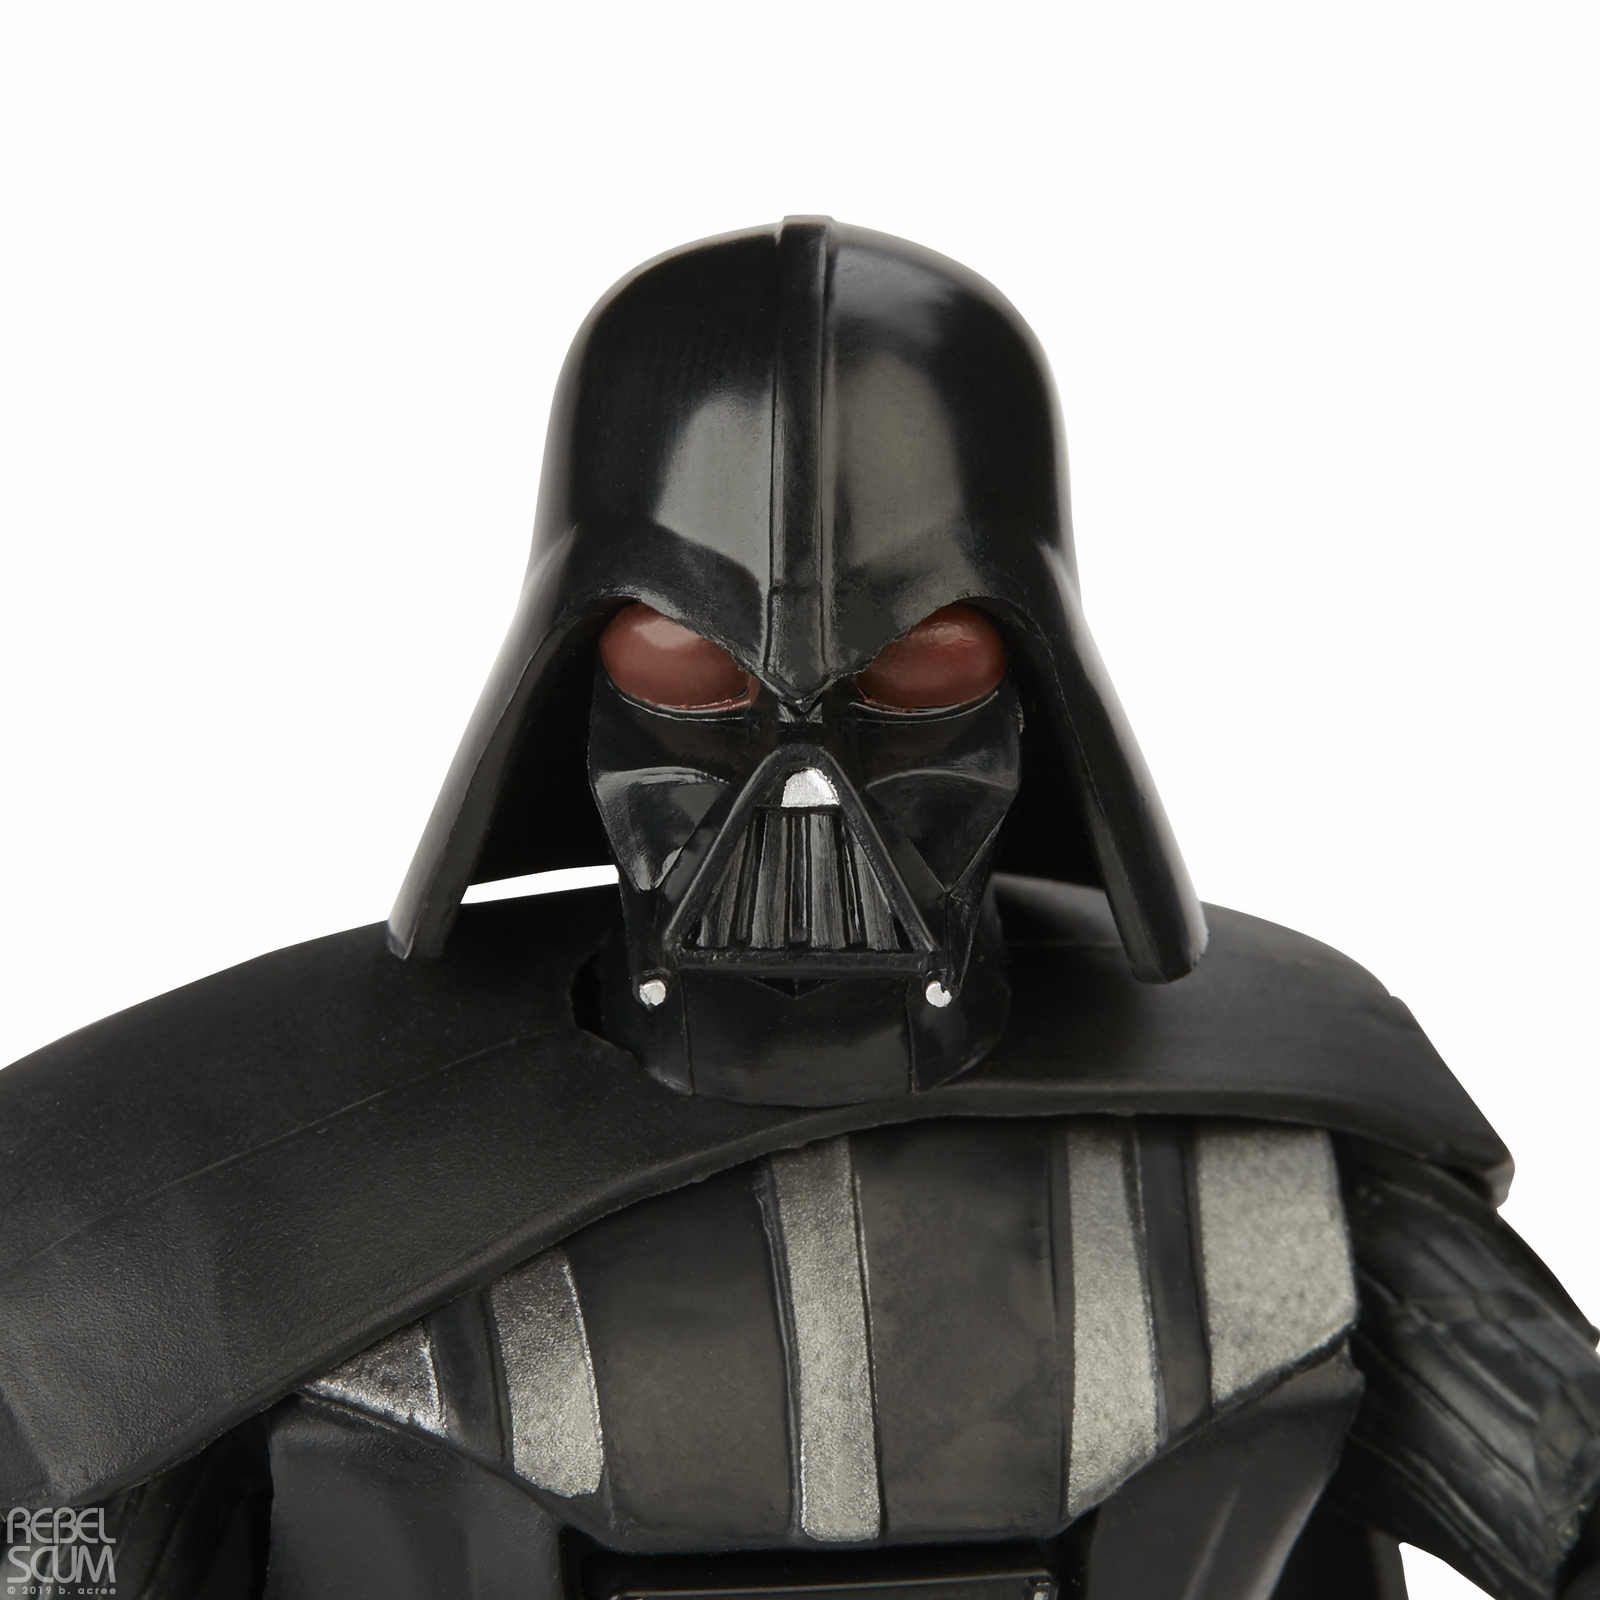 STAR WARS GALAXY OF ADVENTURES 5-INCH Figure Assortment Darth Vader - oop (3).jpg